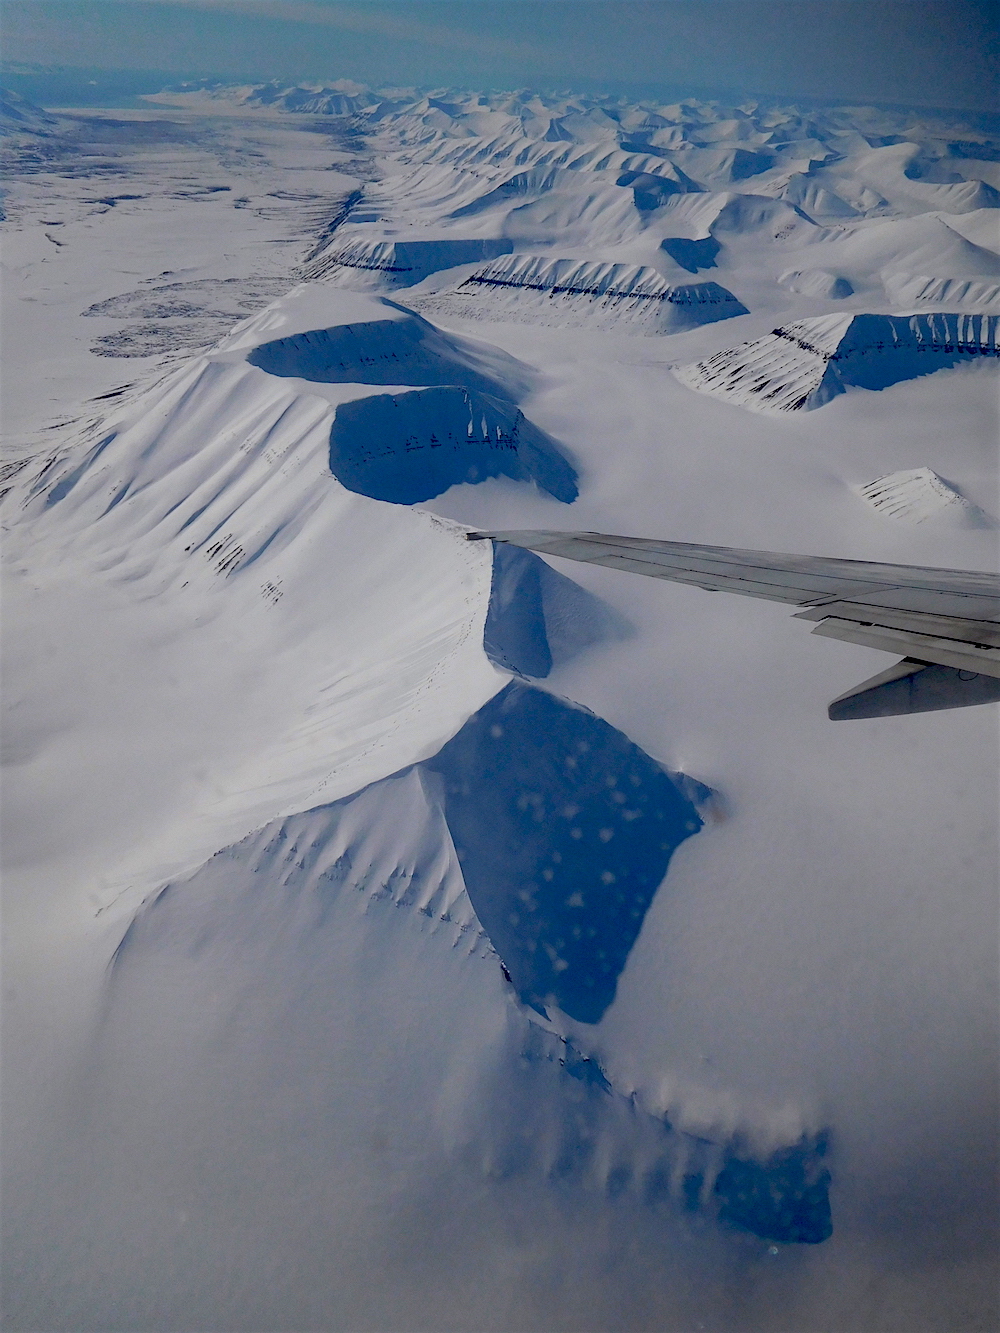 Svalbard from the air. photo: snowbrains